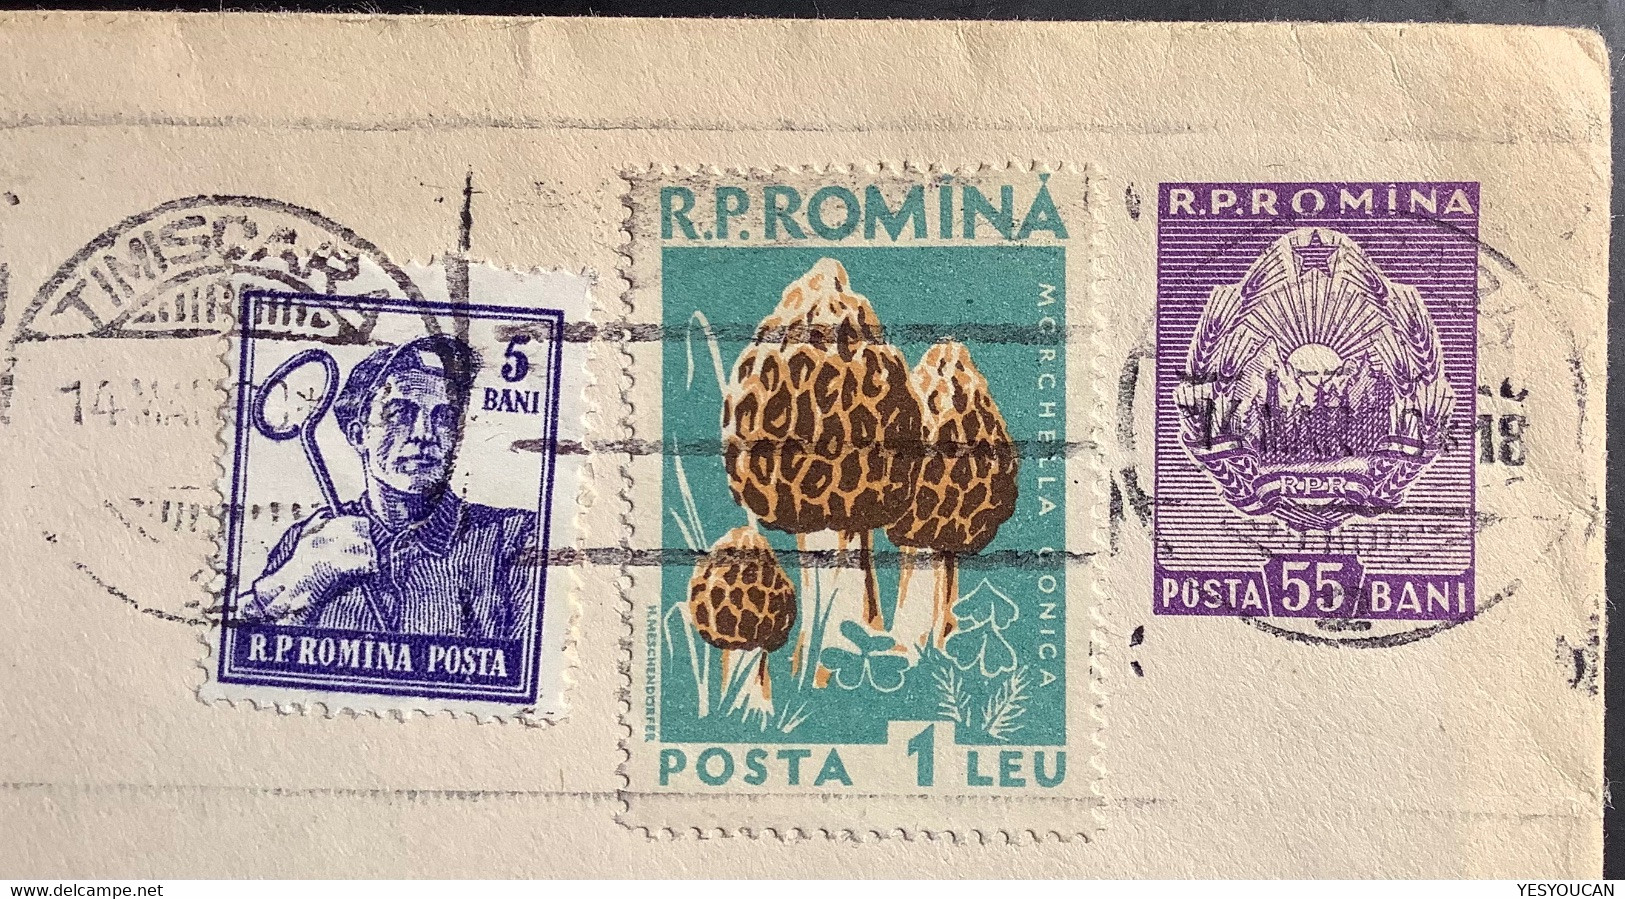 1960 Illustrated Postal Stationery: Plante Médicinale Medecine Plants Fleurs Flowers Mushroom Pilze (Romania Roumanie - Ganzsachen